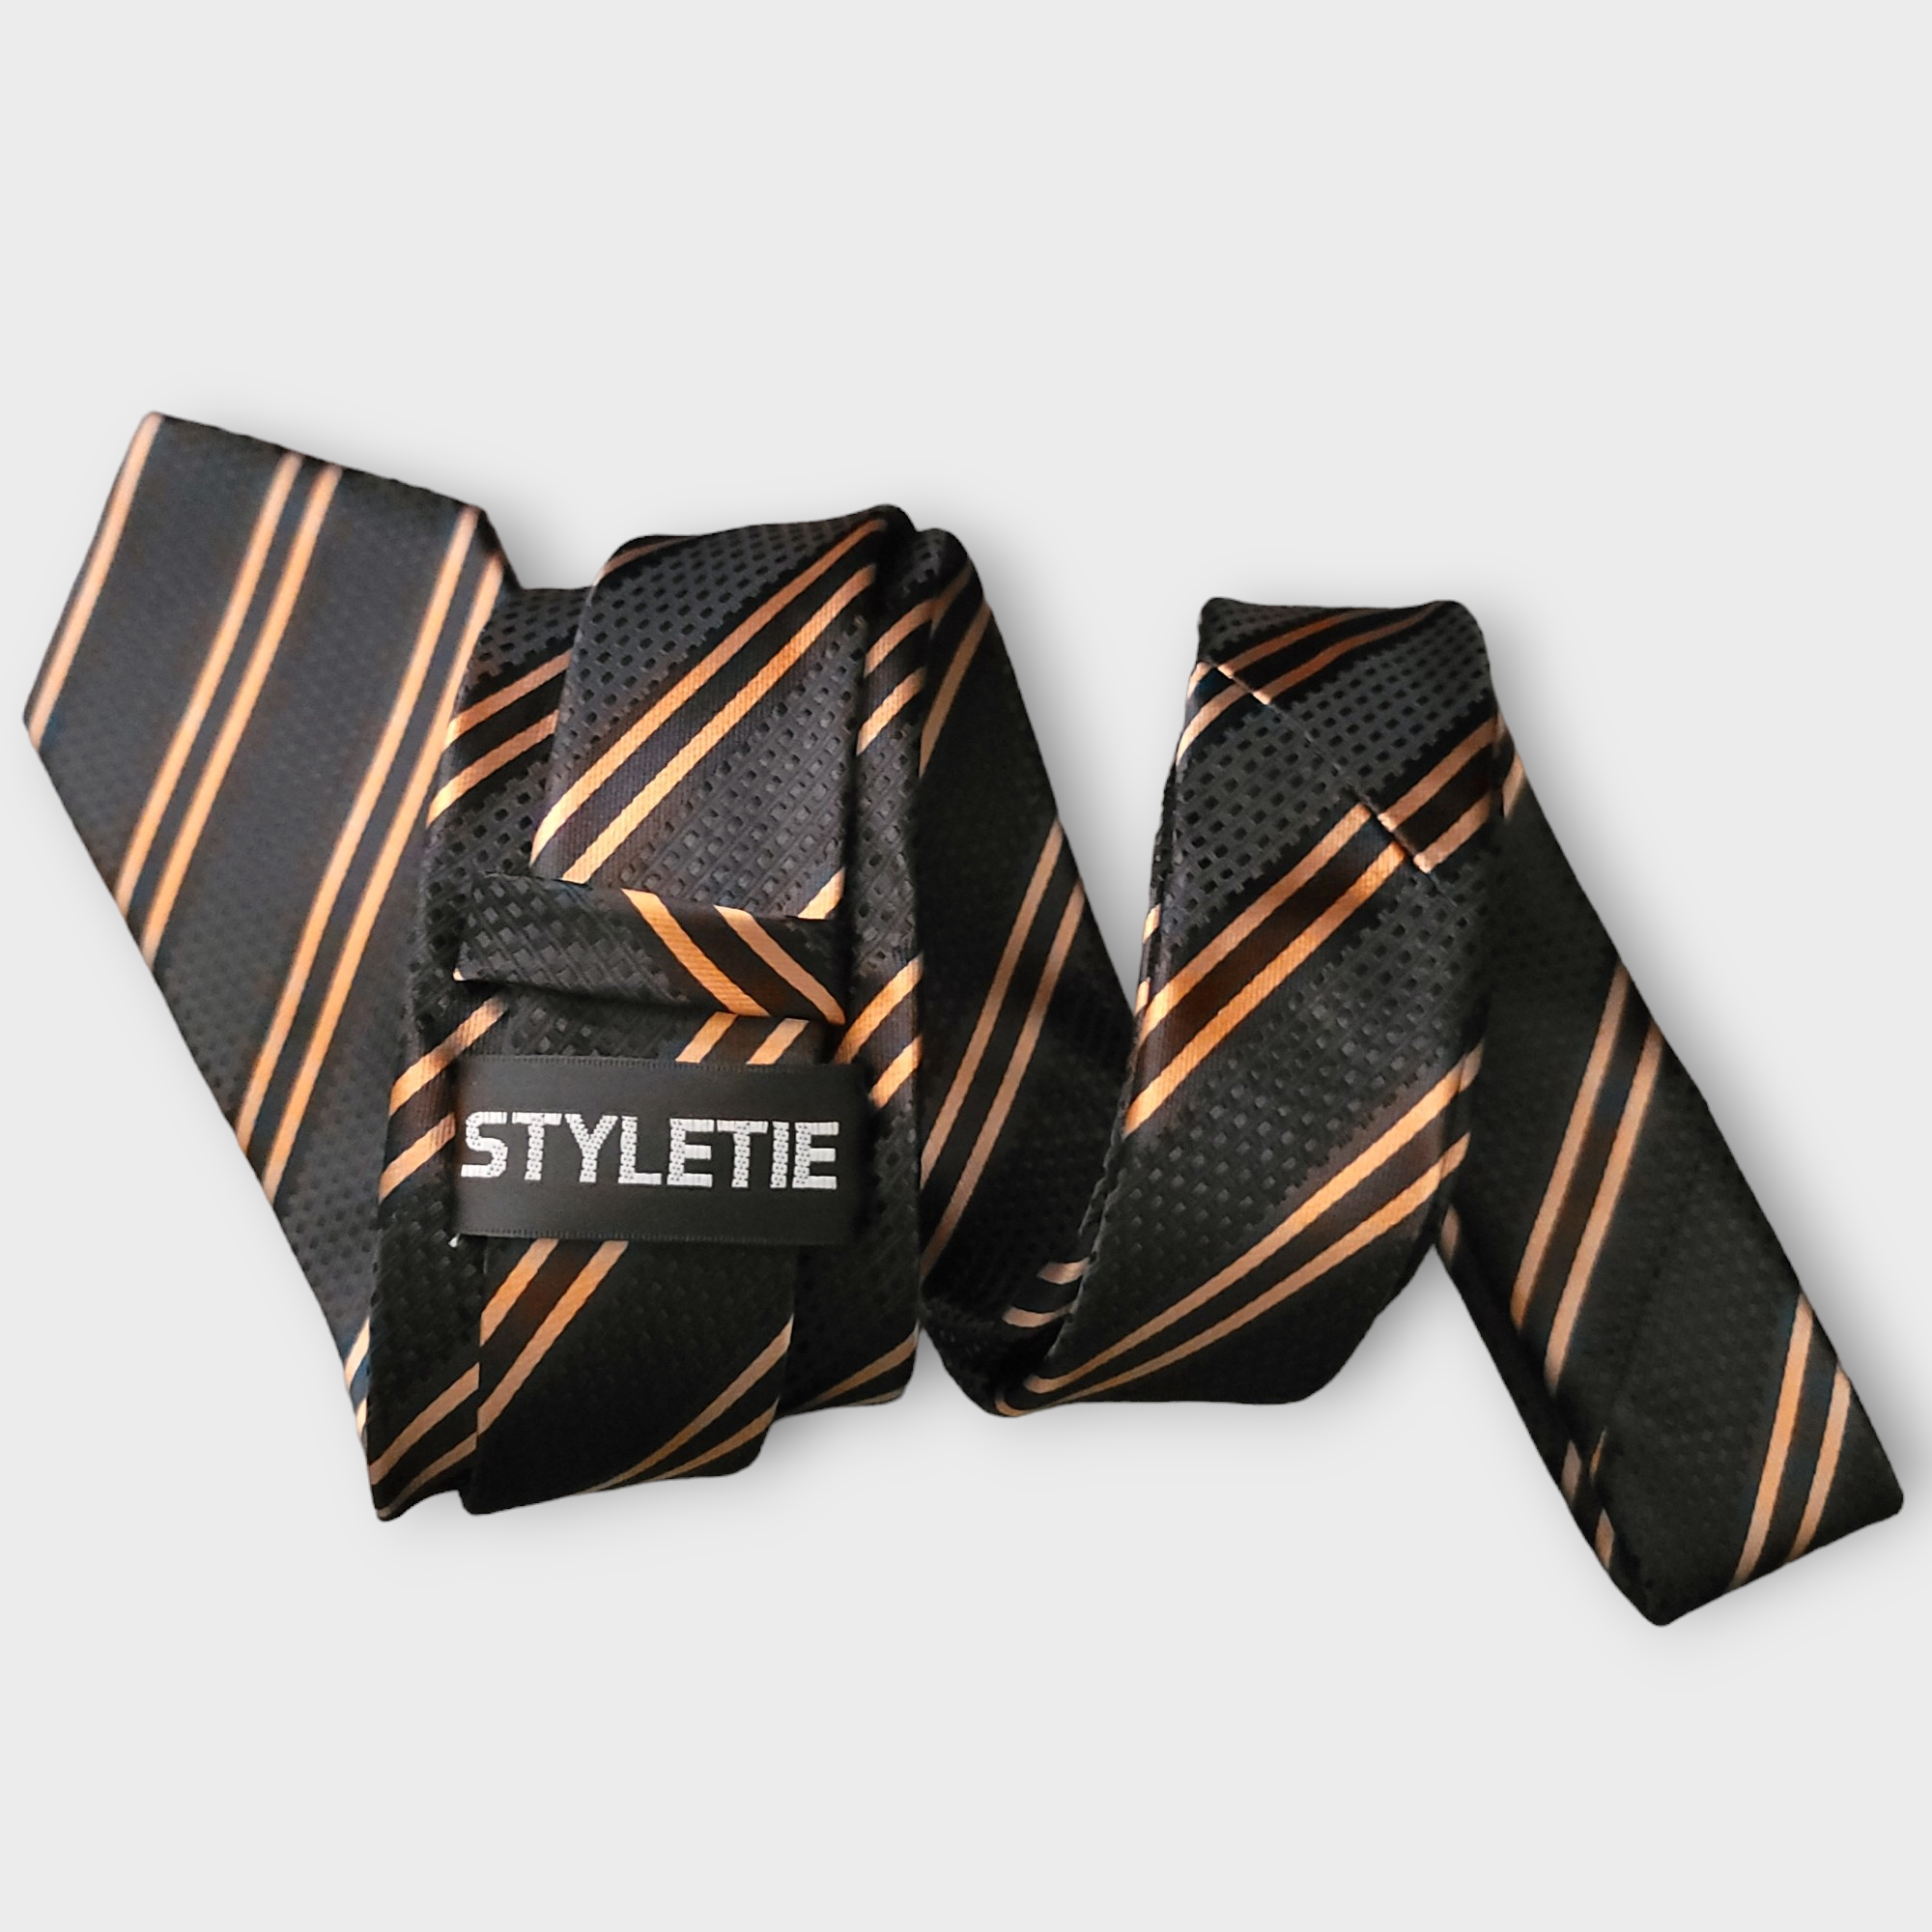 Extra Long Black Orange Stripe Tie Pocket Square Cufflink Set